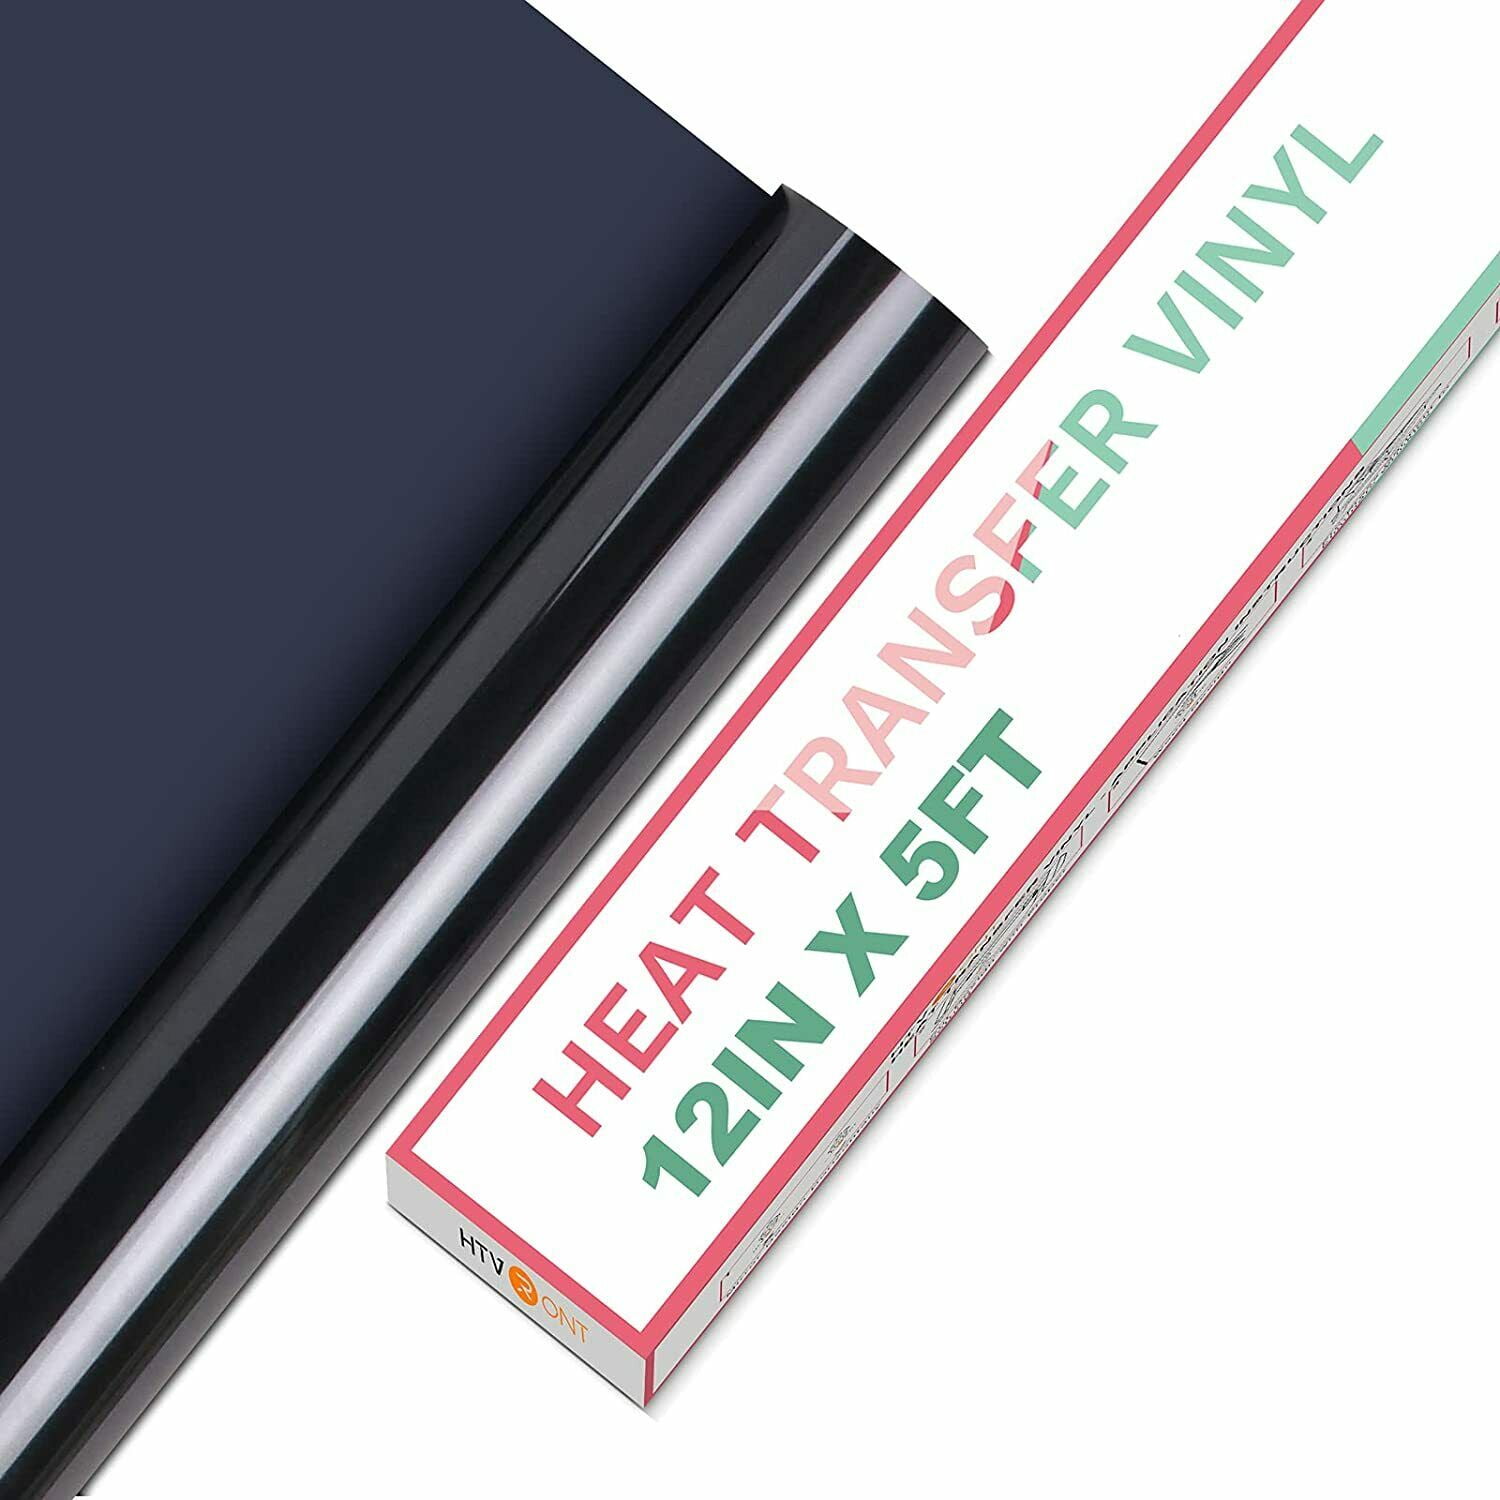  Heat Transfer Vinyl Hisiu Black HTV Vinyl Iron on 12 x 25ft  for Cricut & Silhouette Cuntters and Heat Press, 1 Roll Black HTV Vinyl for  Shirts, DIY Fabrics Heat Vinyl